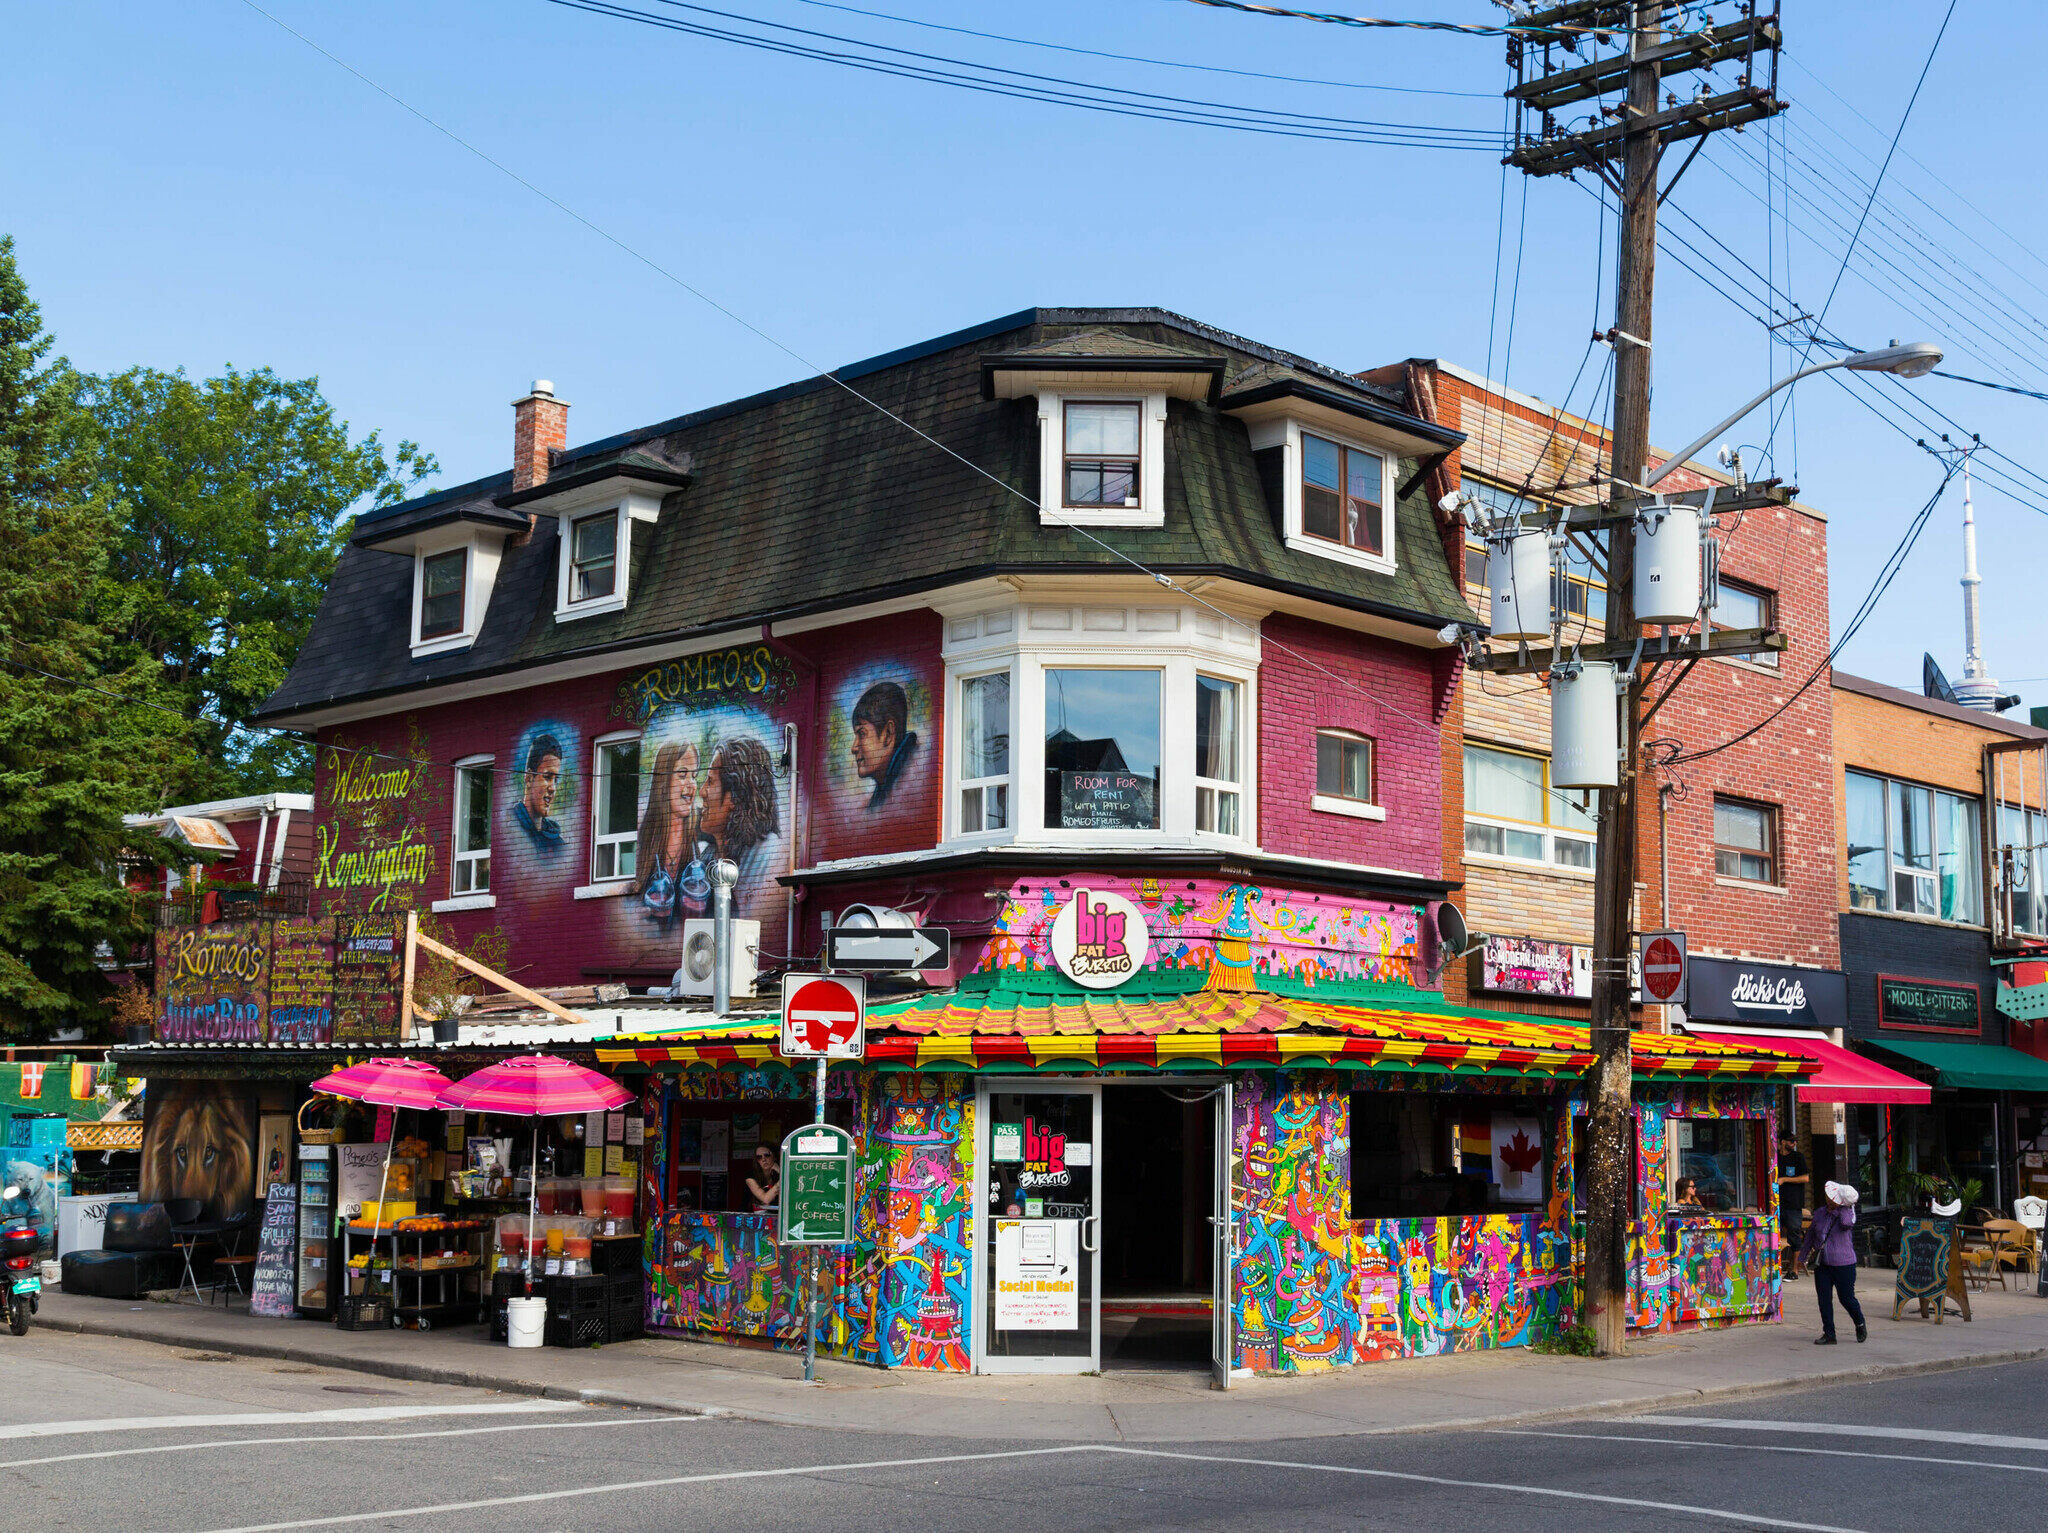 Queen Street West: Best Place To Eat In Toronto 2023